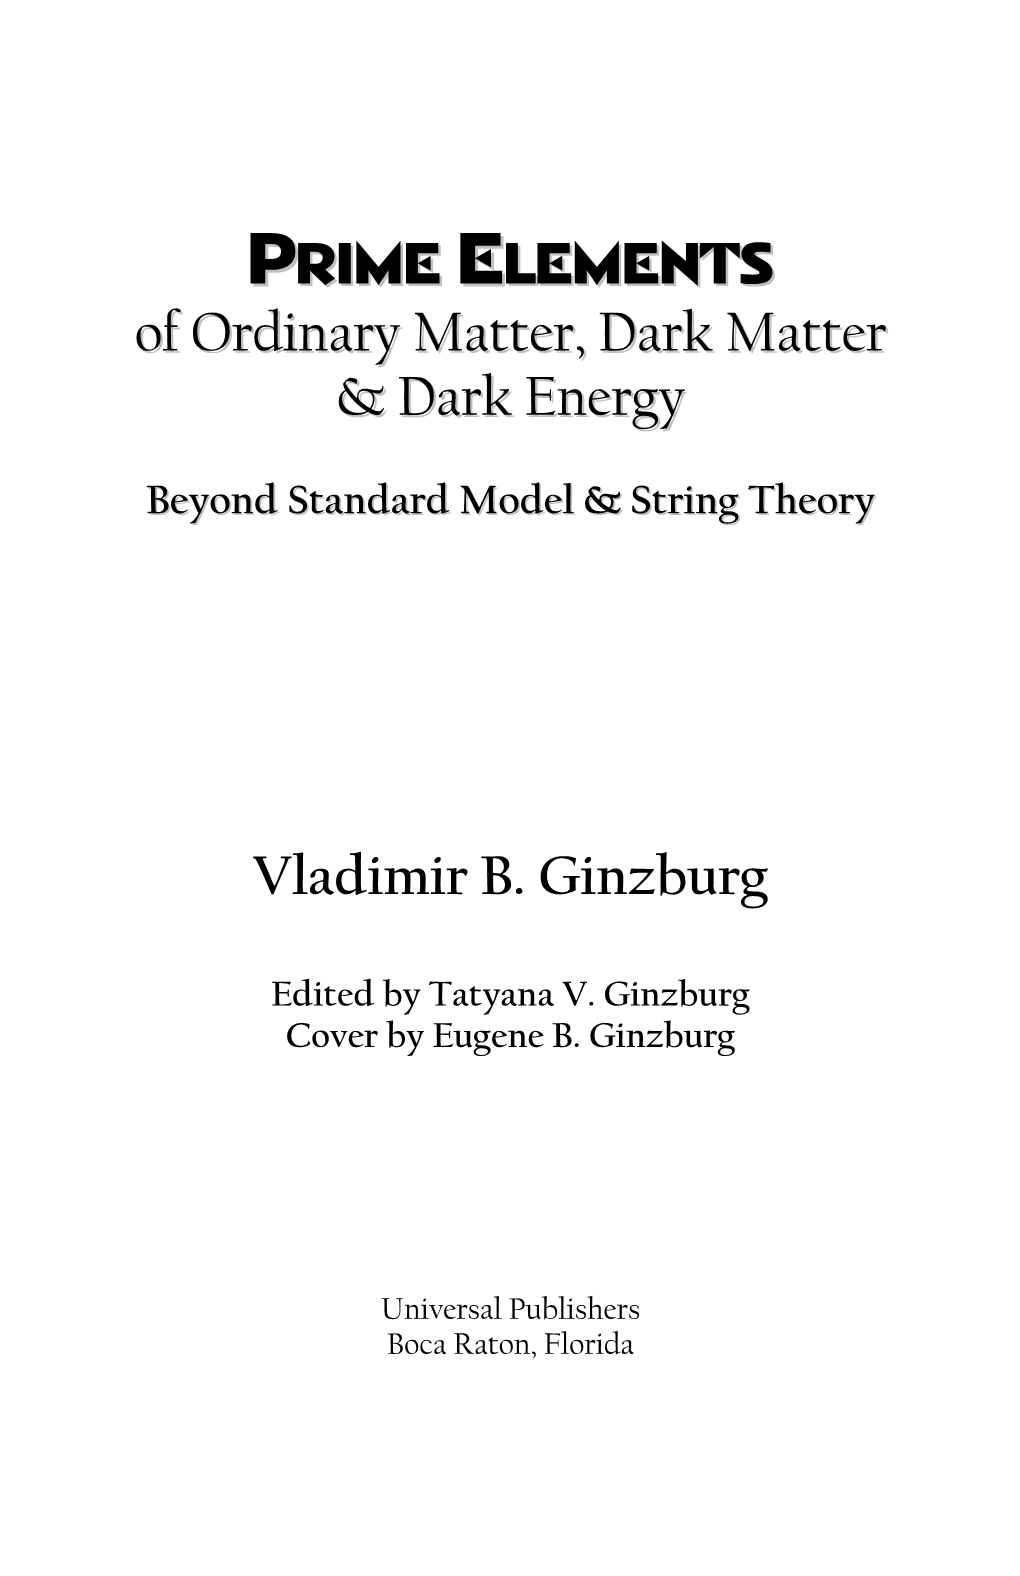 PRIME ELEMENTS of Ordinary Matter, Dark Matter & Dark Energy